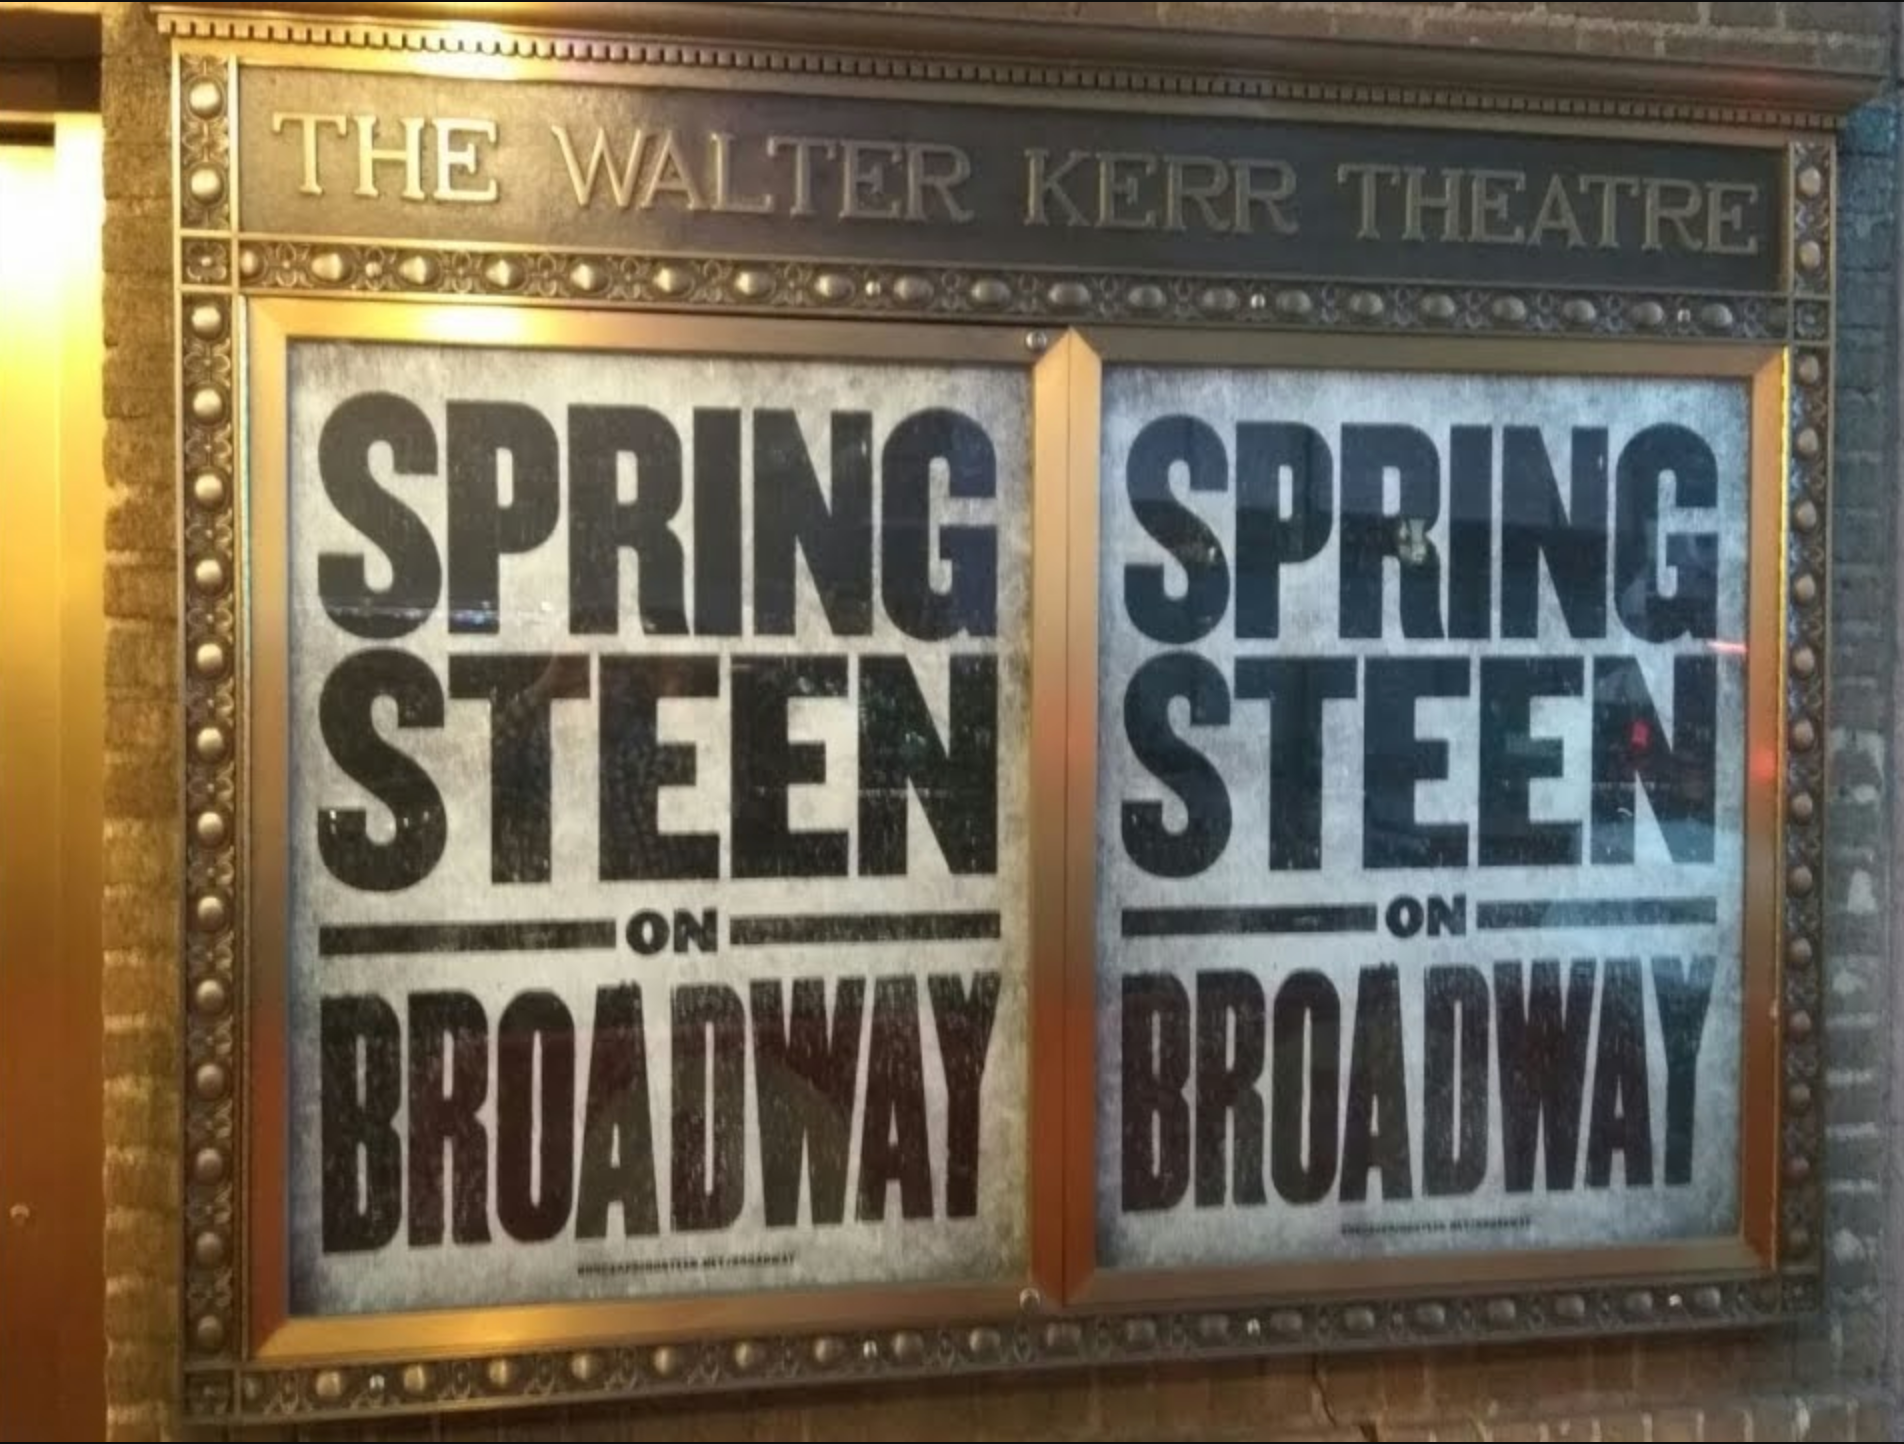 Walter Kerr Theatre Seating Chart Broadway